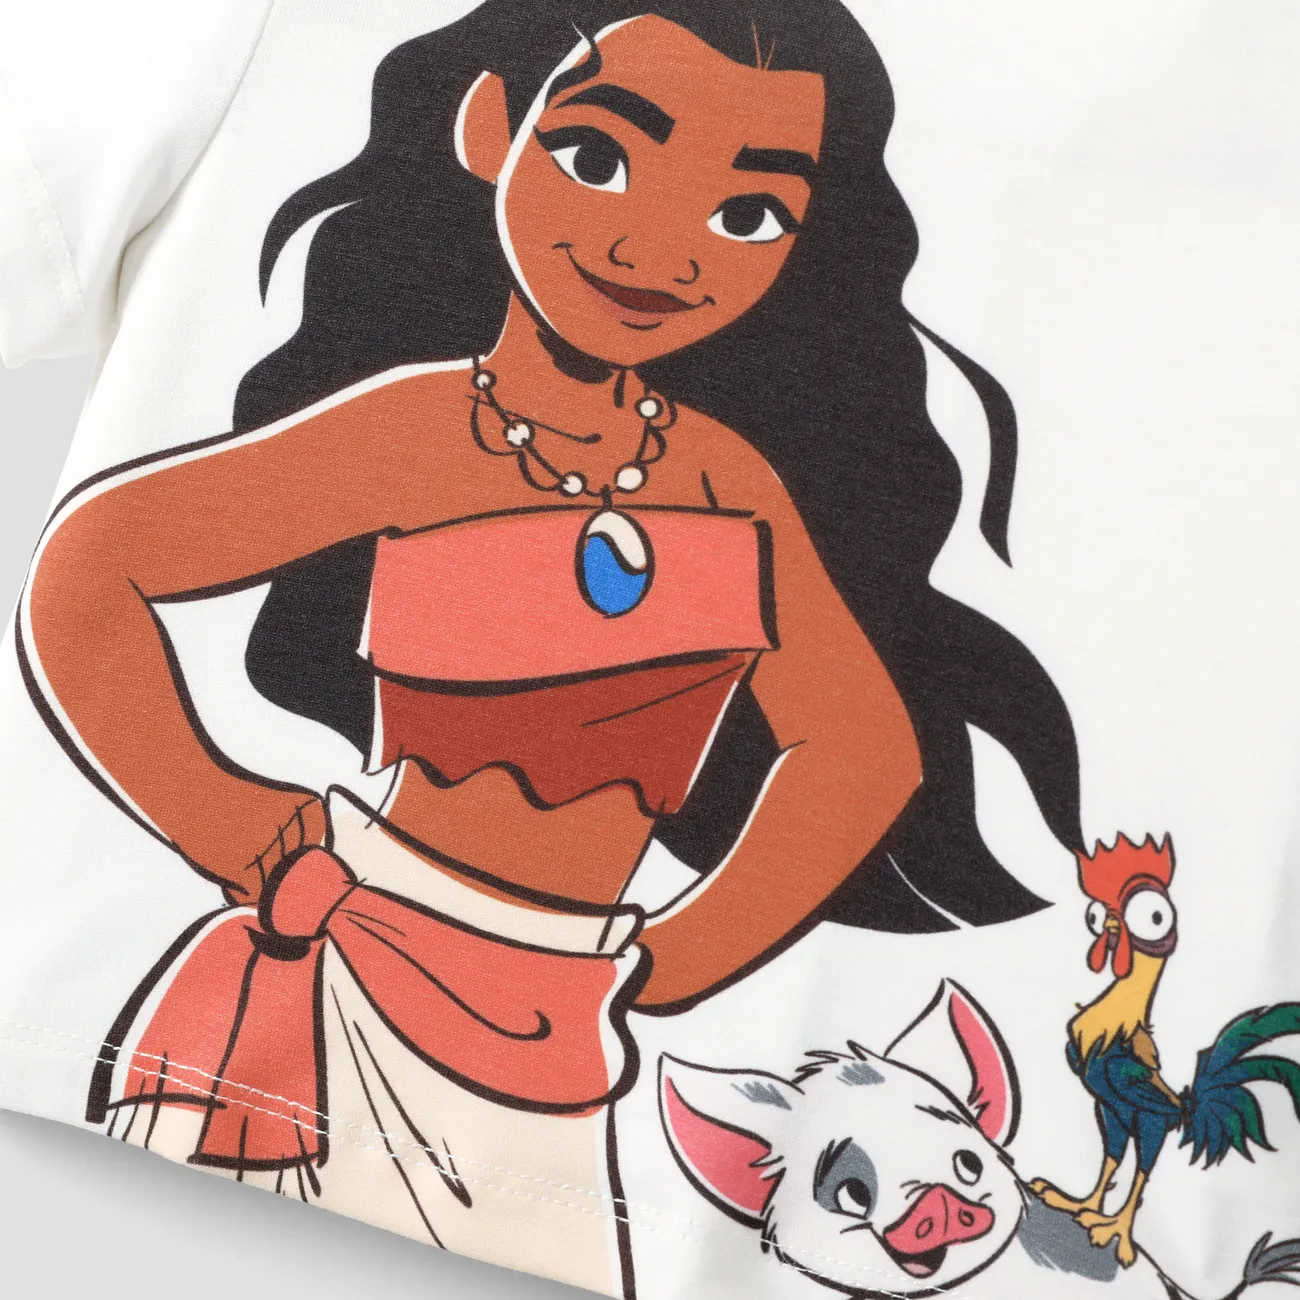 Disney Princess Moana/Ariel 2pcs Toddler Girls Naia™ Character Print T-shirt with Pattern All-over with Ruffled Skirt Set White big image 1